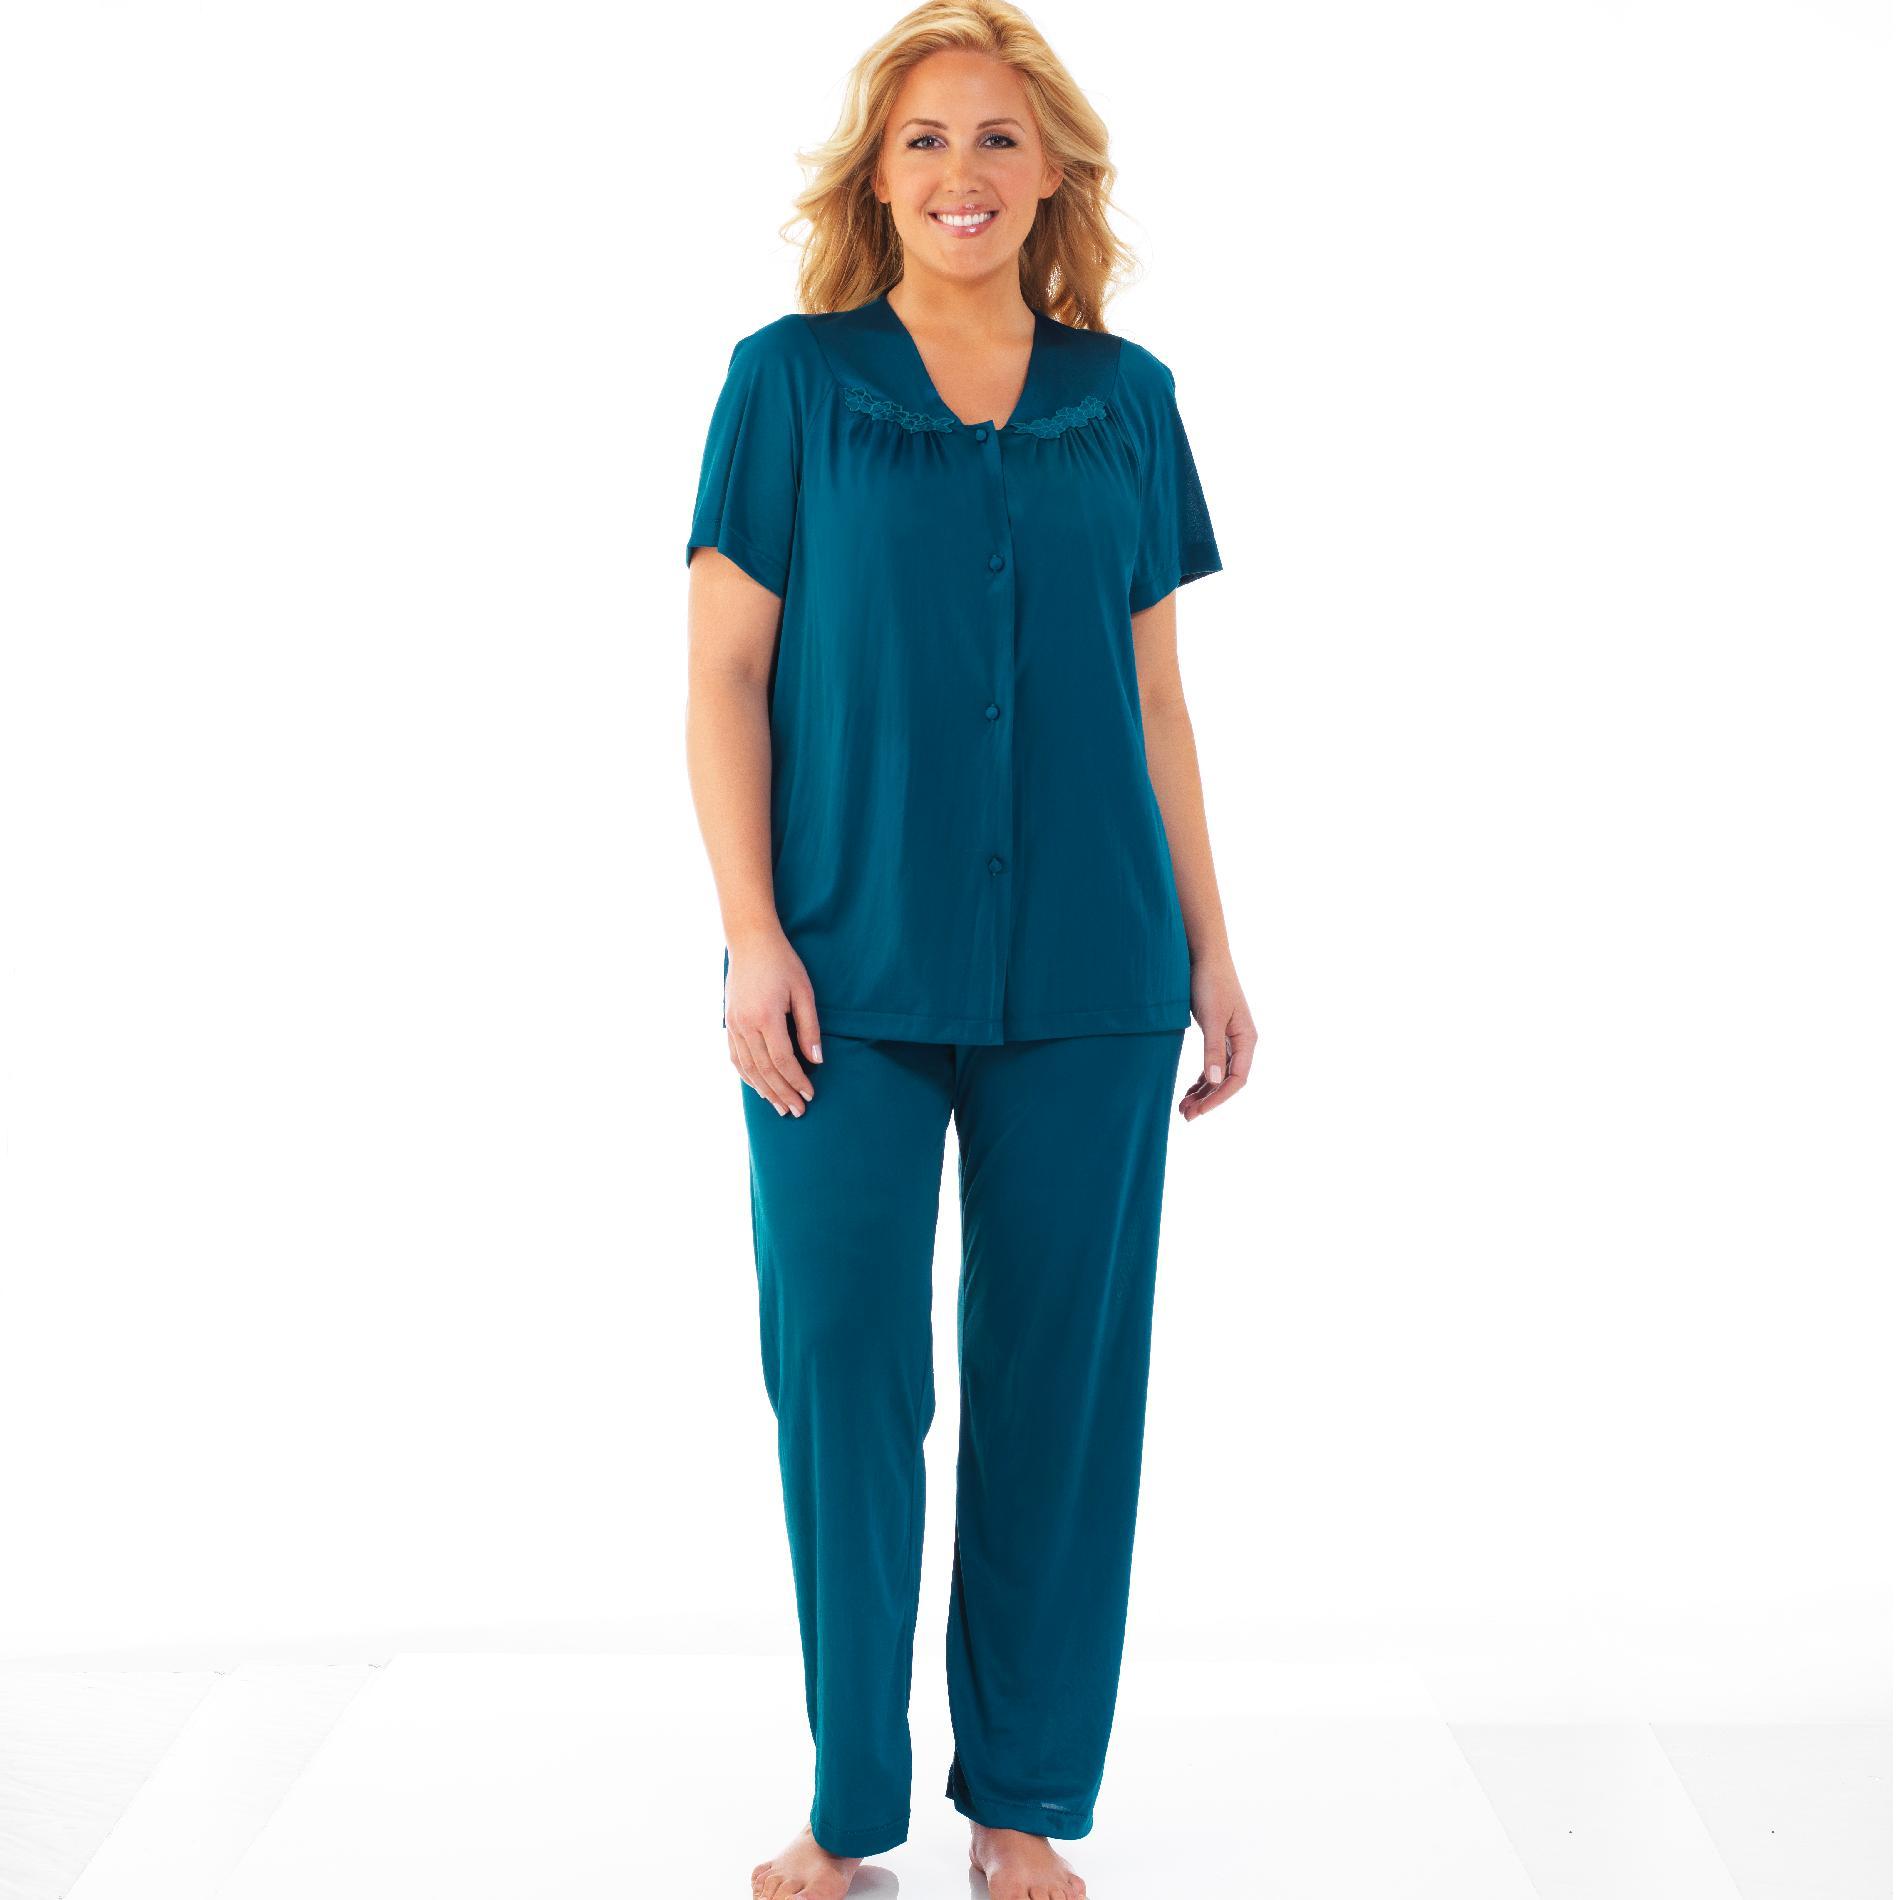 UPC 083623102474 product image for Women's Vanity Fair Colortura Short Sleeve Pajama Set | upcitemdb.com